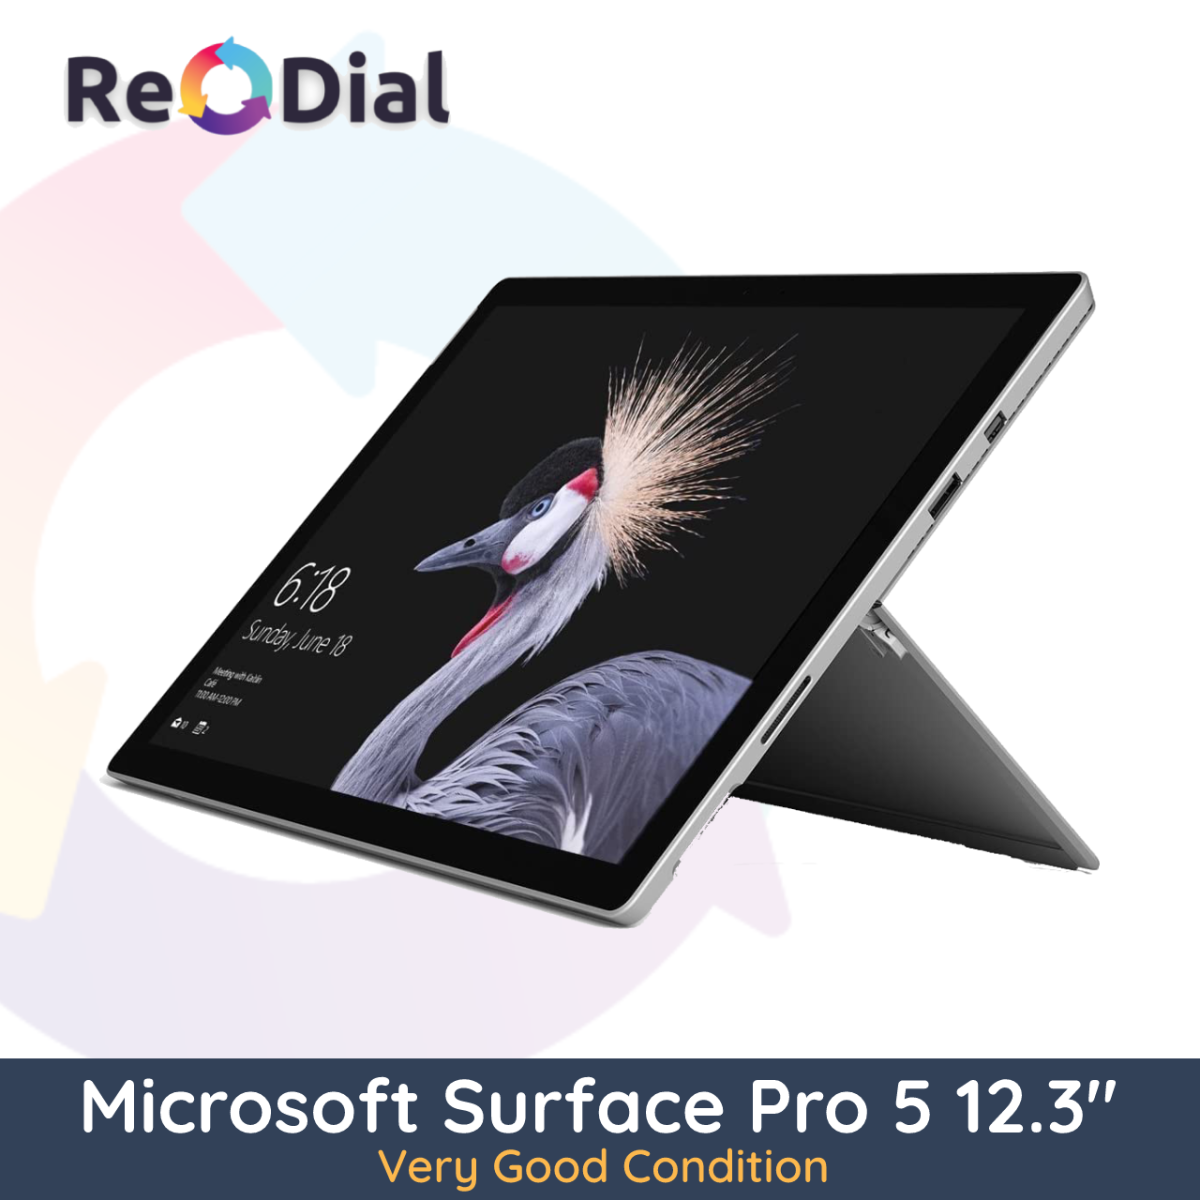 Microsoft Surface Pro 5 12.3" i5-7300 256GB 8GB RAM - Very Good Condition